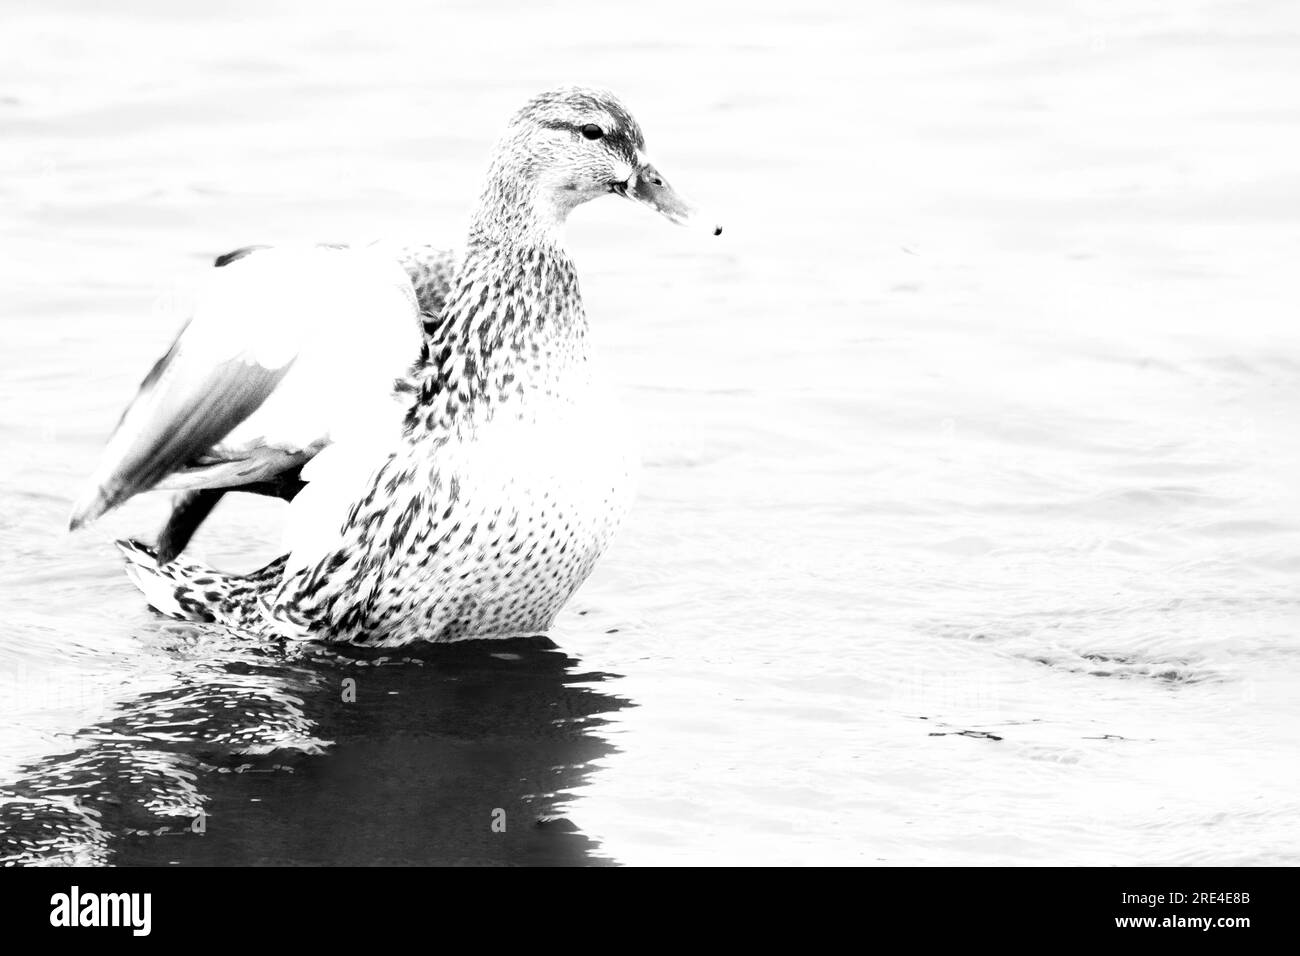 Mallard duck taking off from a lake Stock Photo